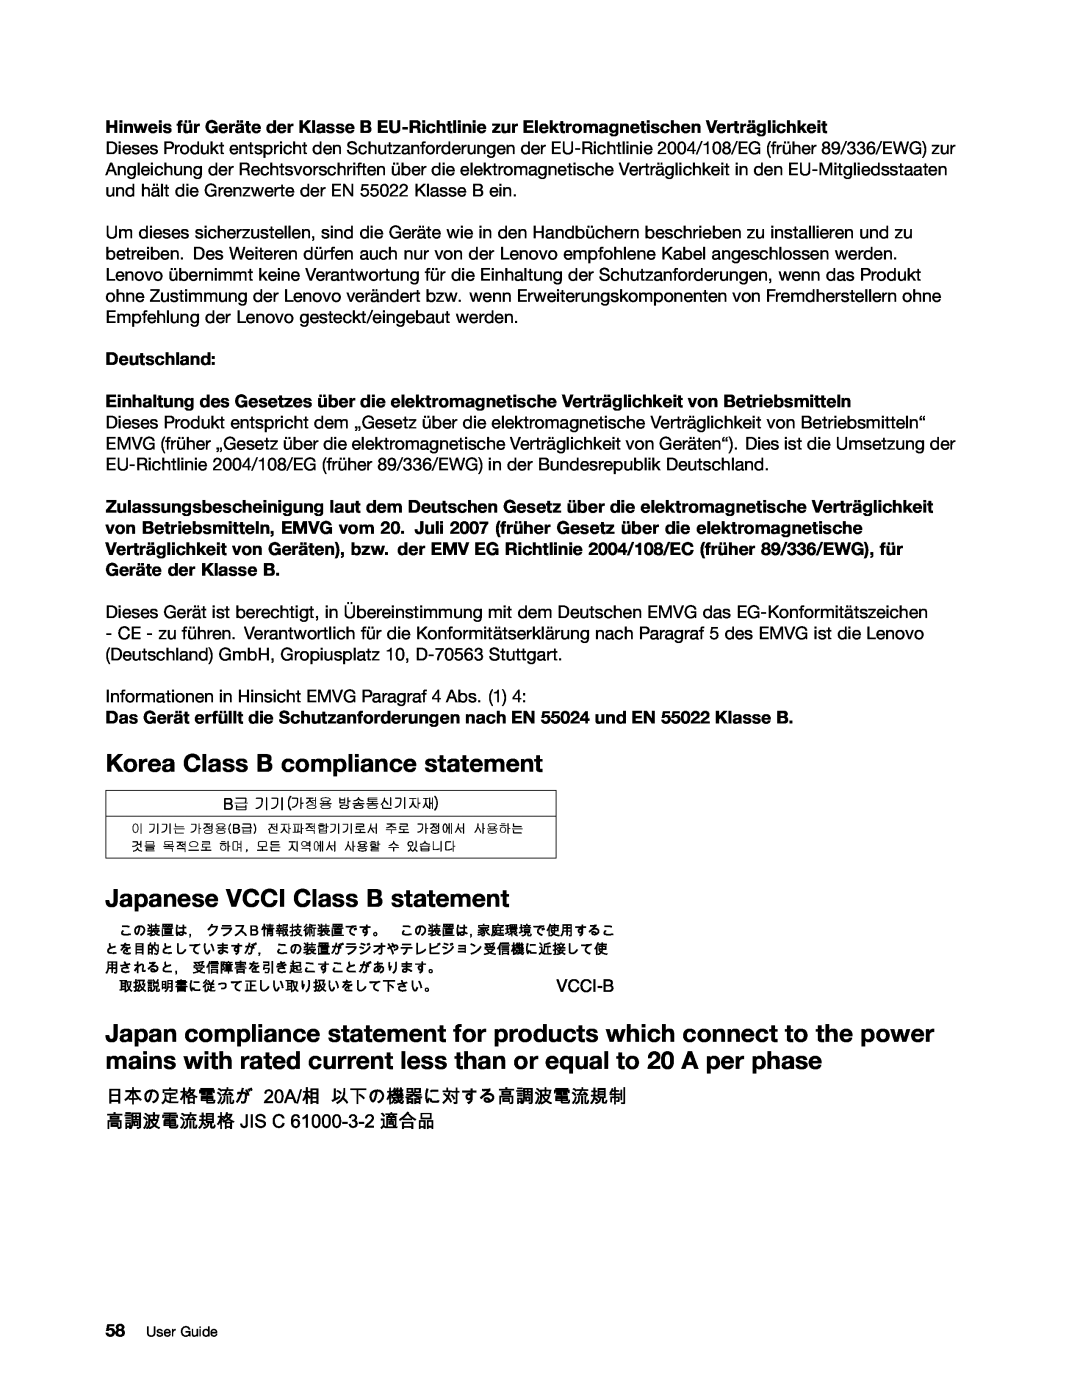 Lenovo 36822AU, 368229U, 368222U, 36795YU Korea Class B compliance statement Japanese VCCI Class B statement, Deutschland 